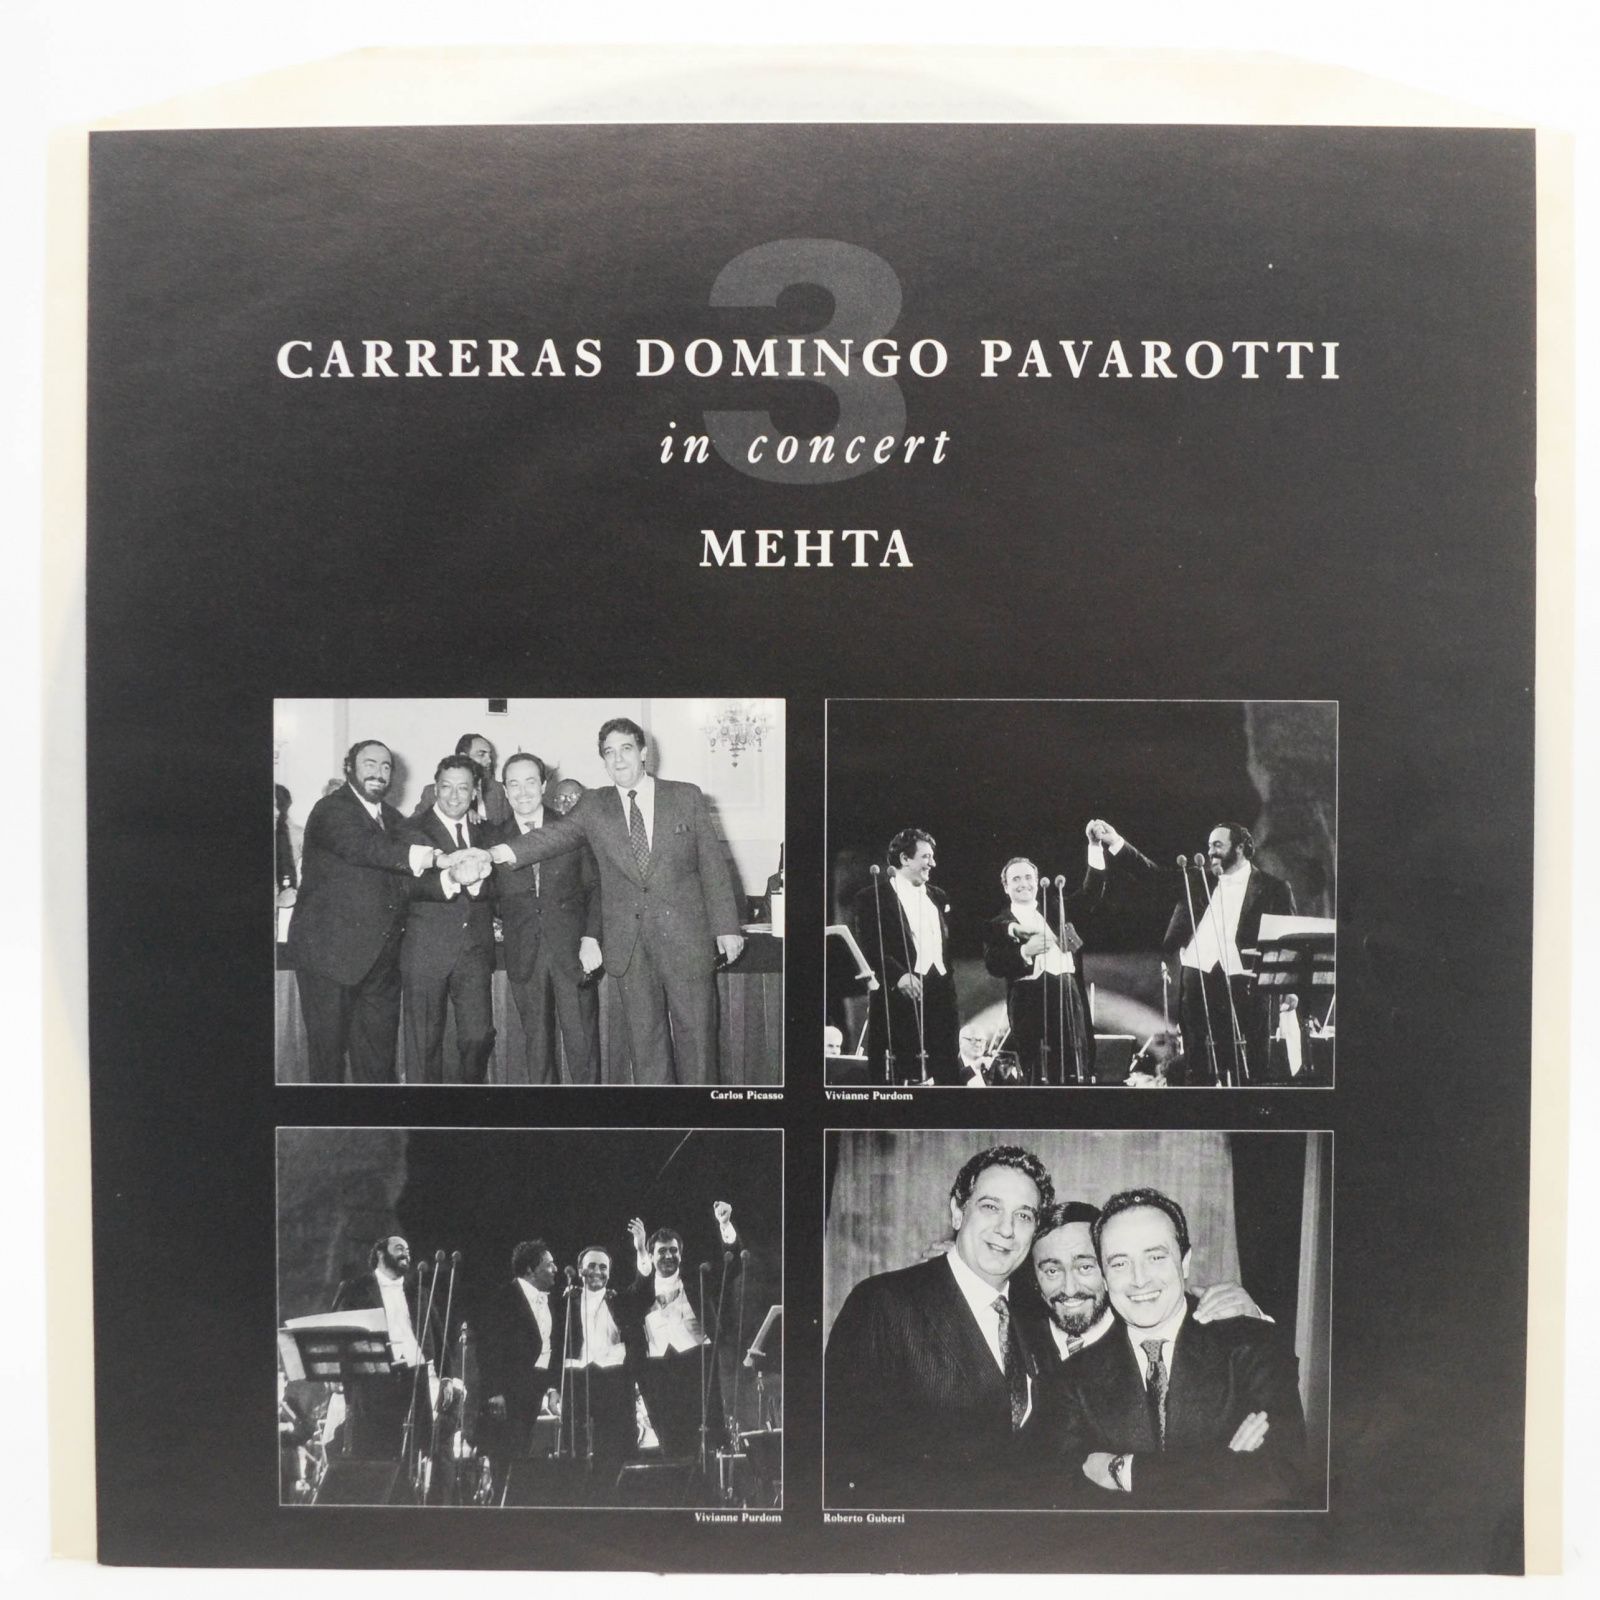 Carreras, Domingo, Pavarotti, Mehta — In Concert (booklet), 1990